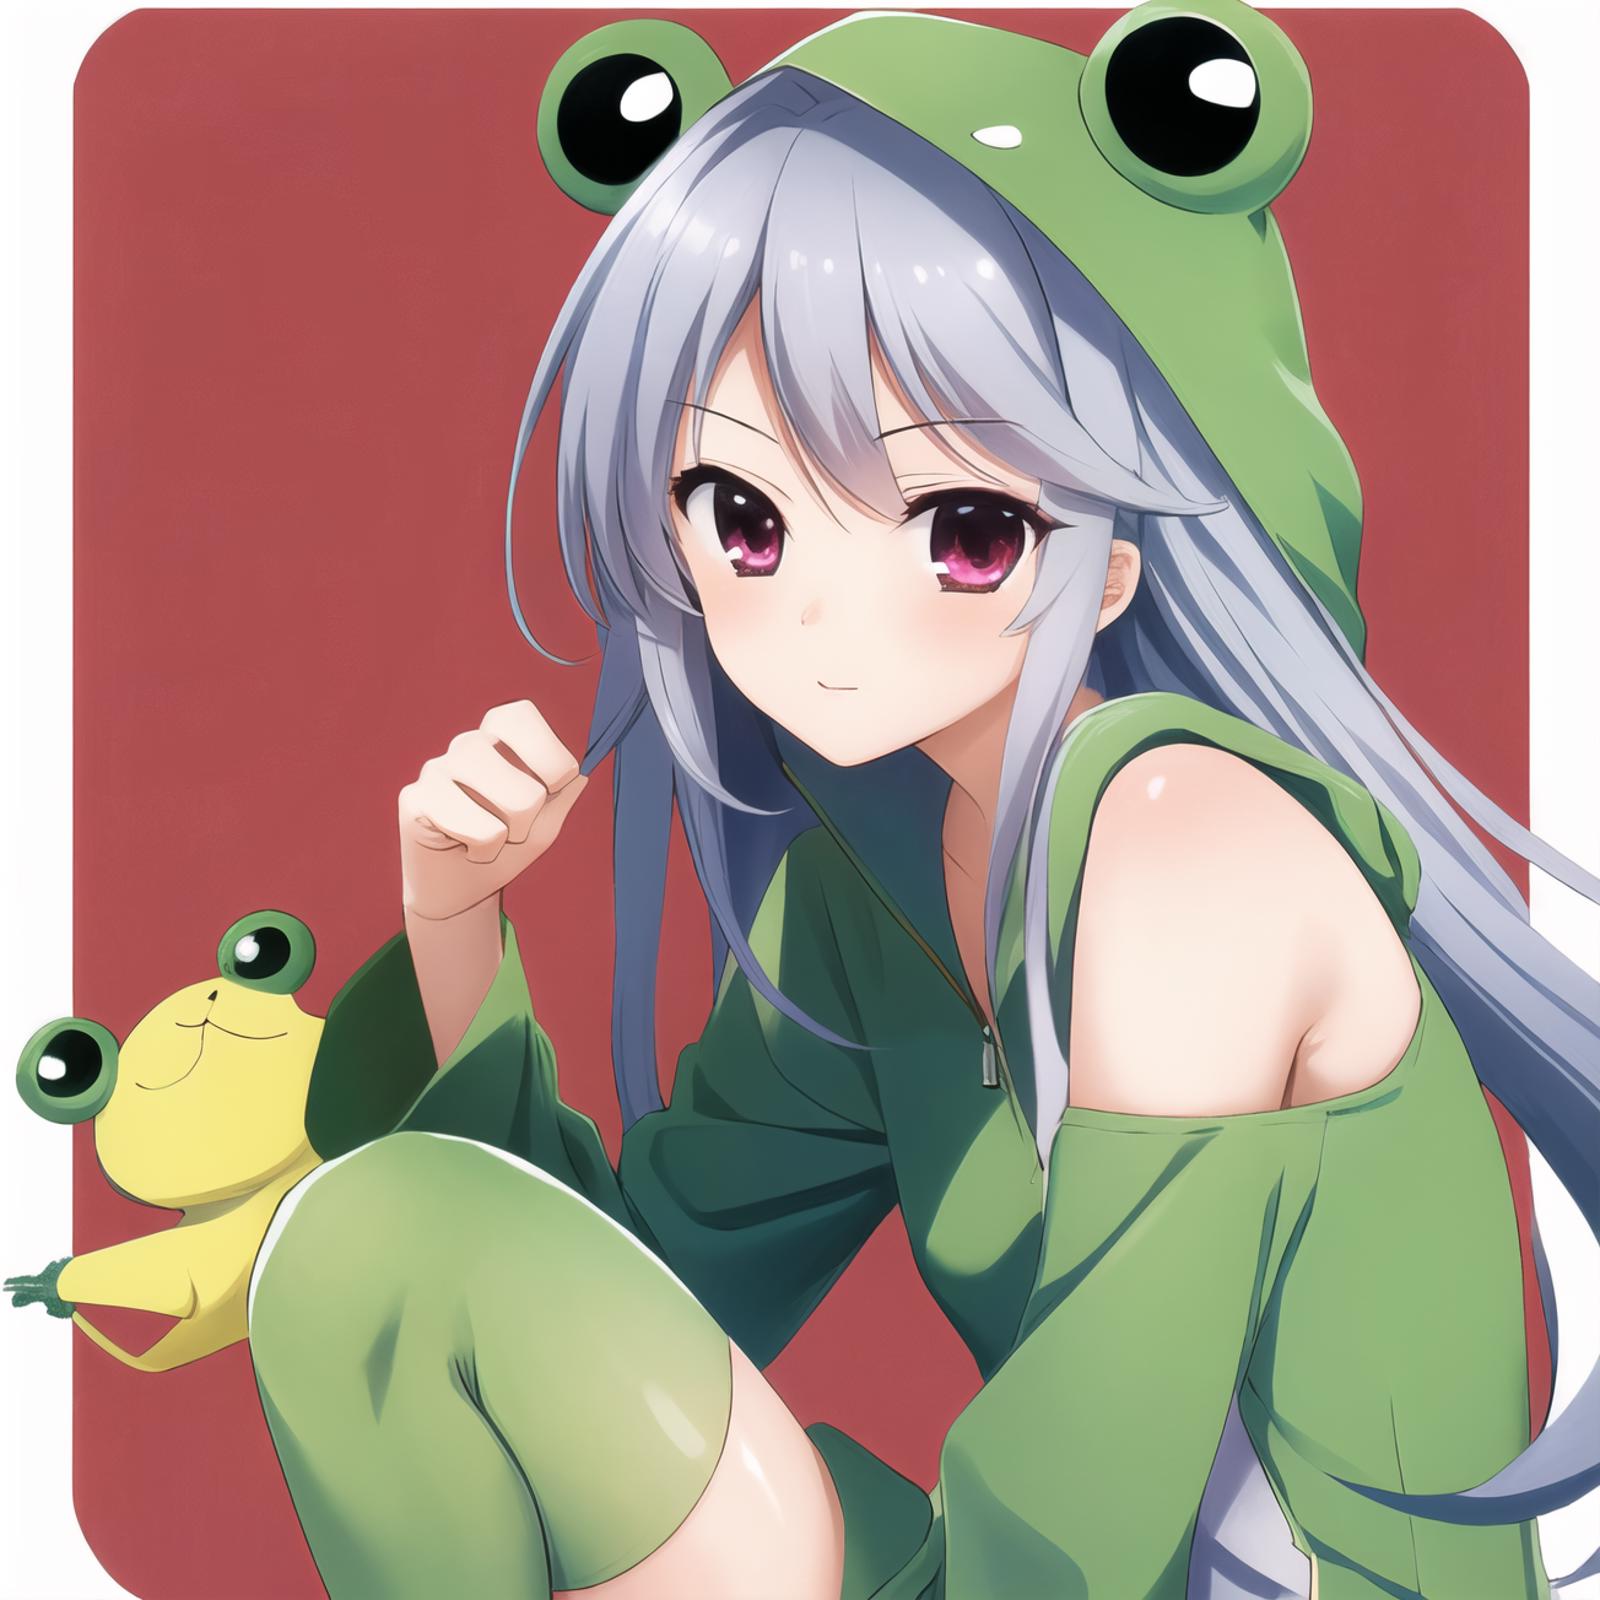 Frog costume image by Kojimbomber